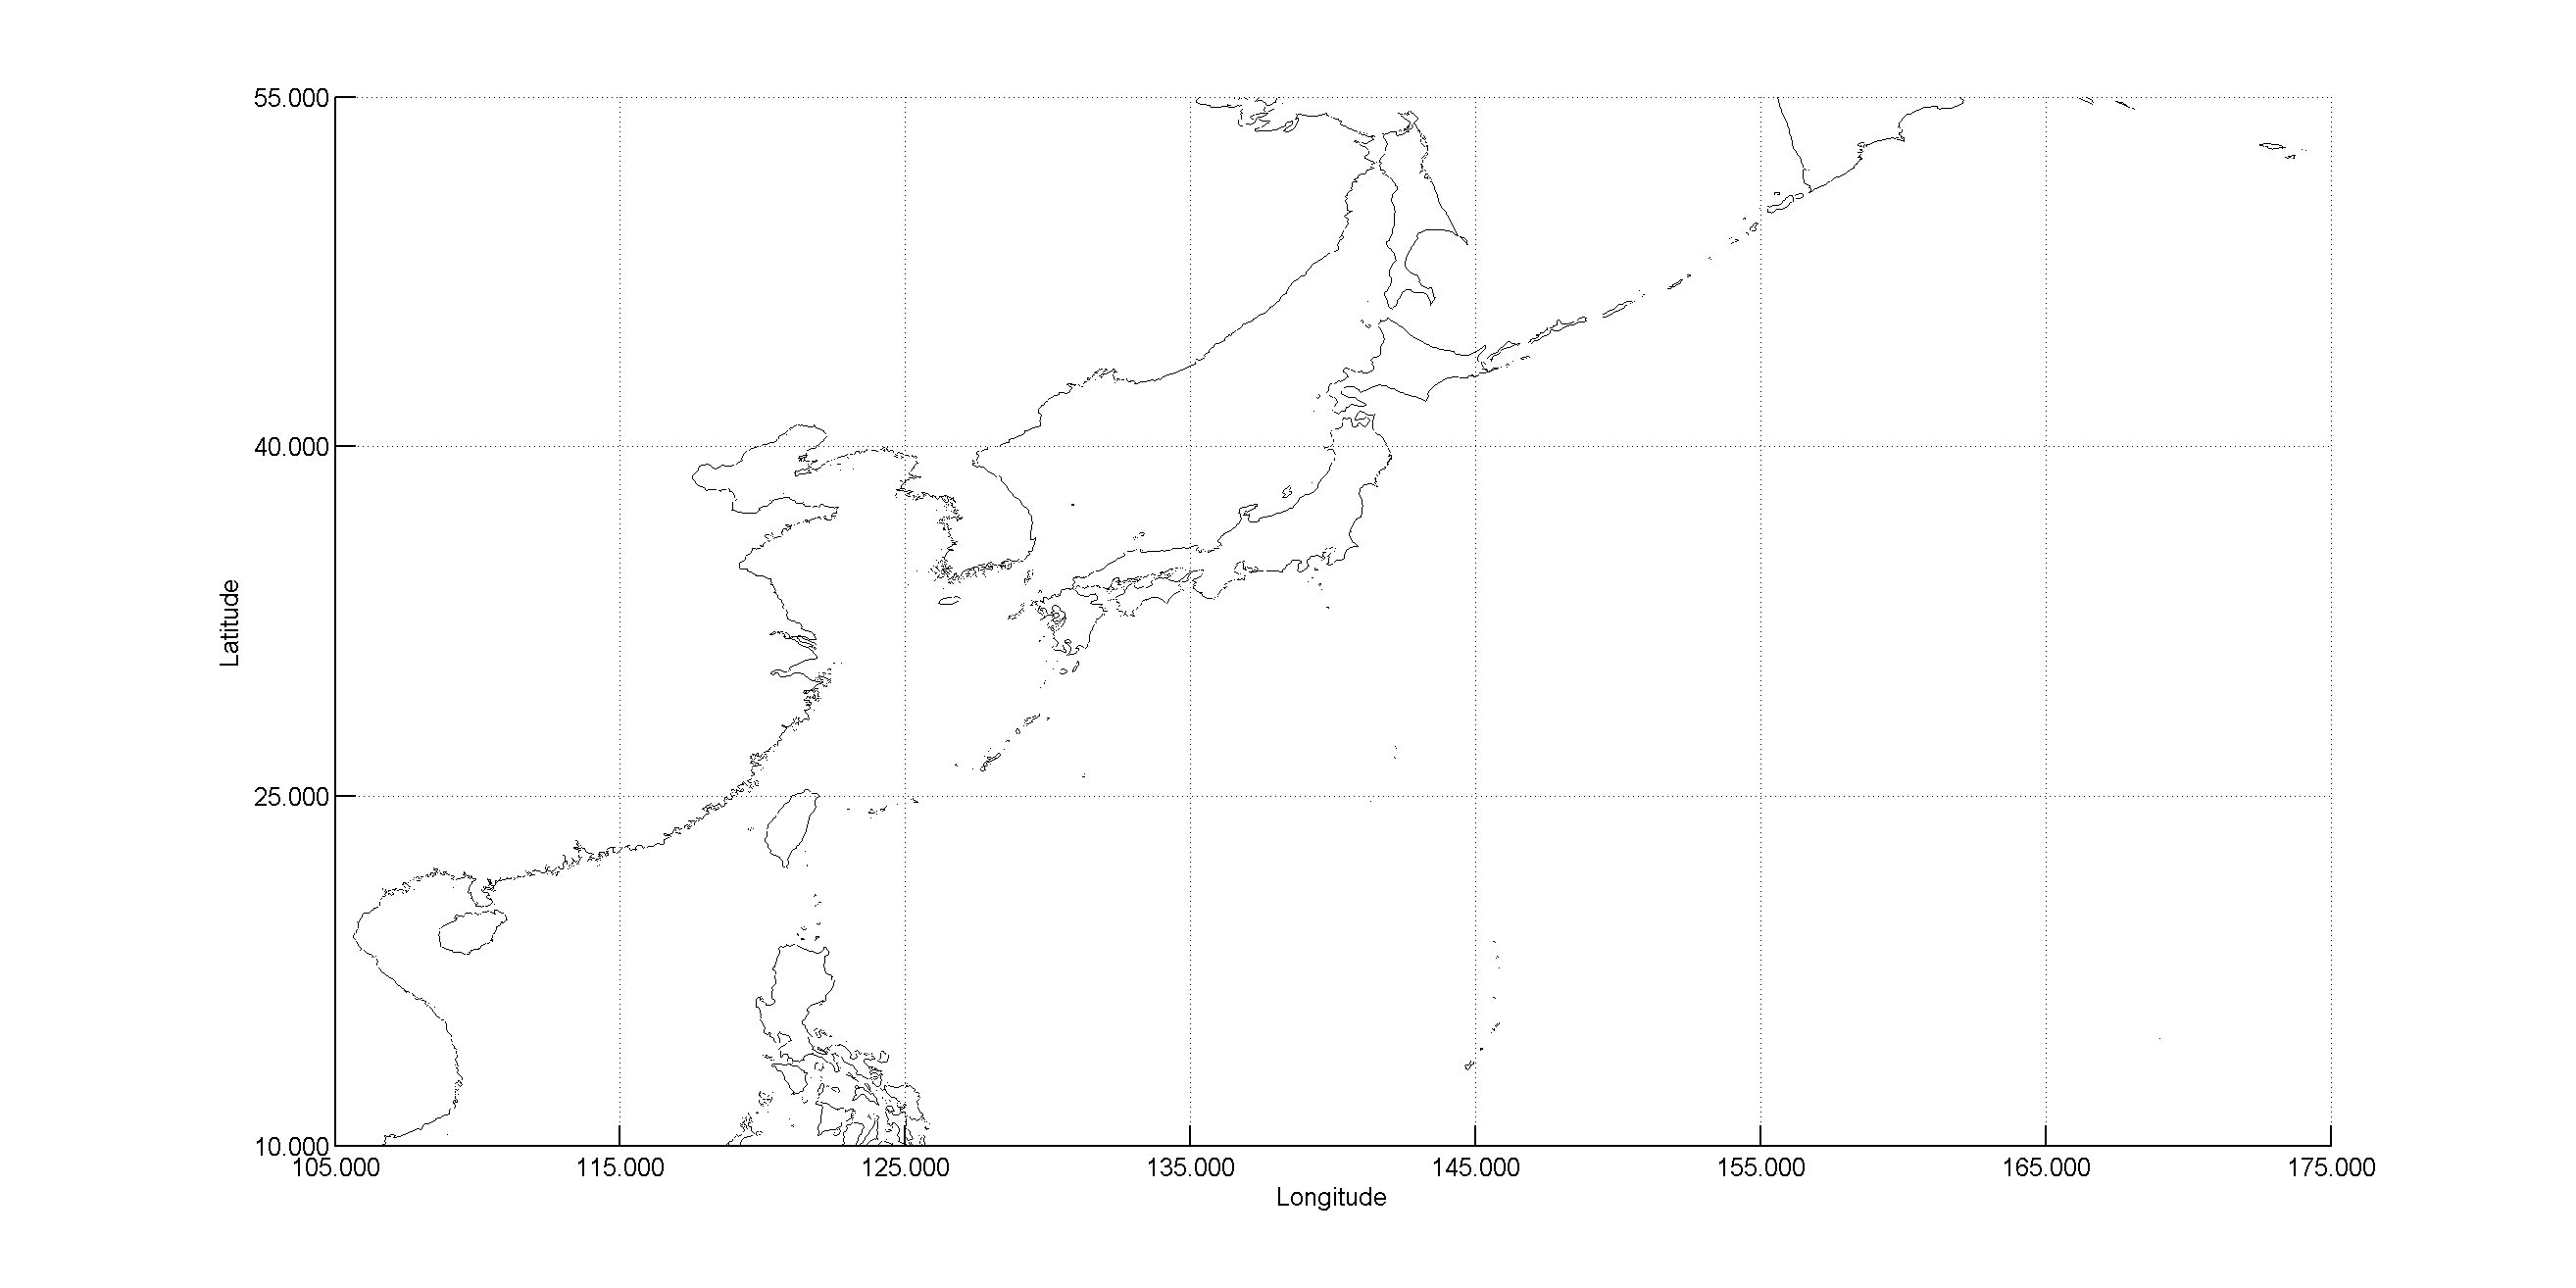 CYCLE_118 - Japan Ascending passes